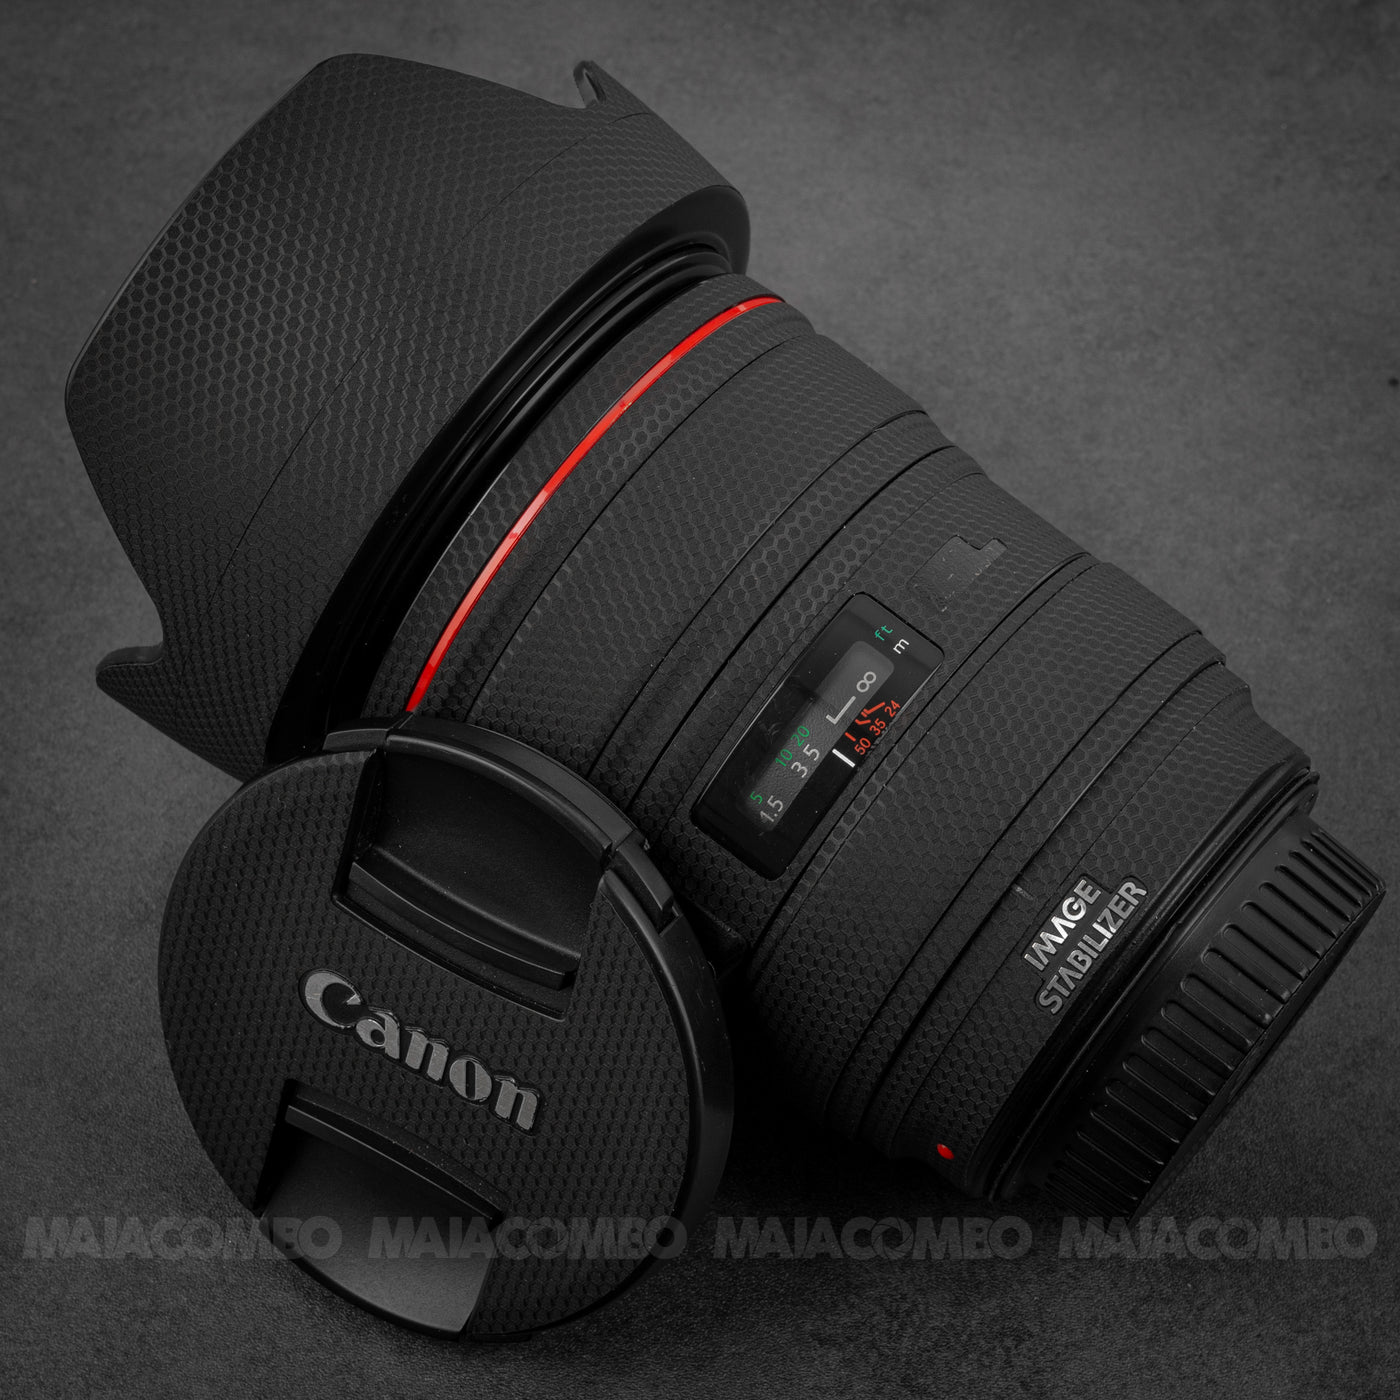 Canon EF 24-105mm F4L IS II USM Lens Skin/ Wrap